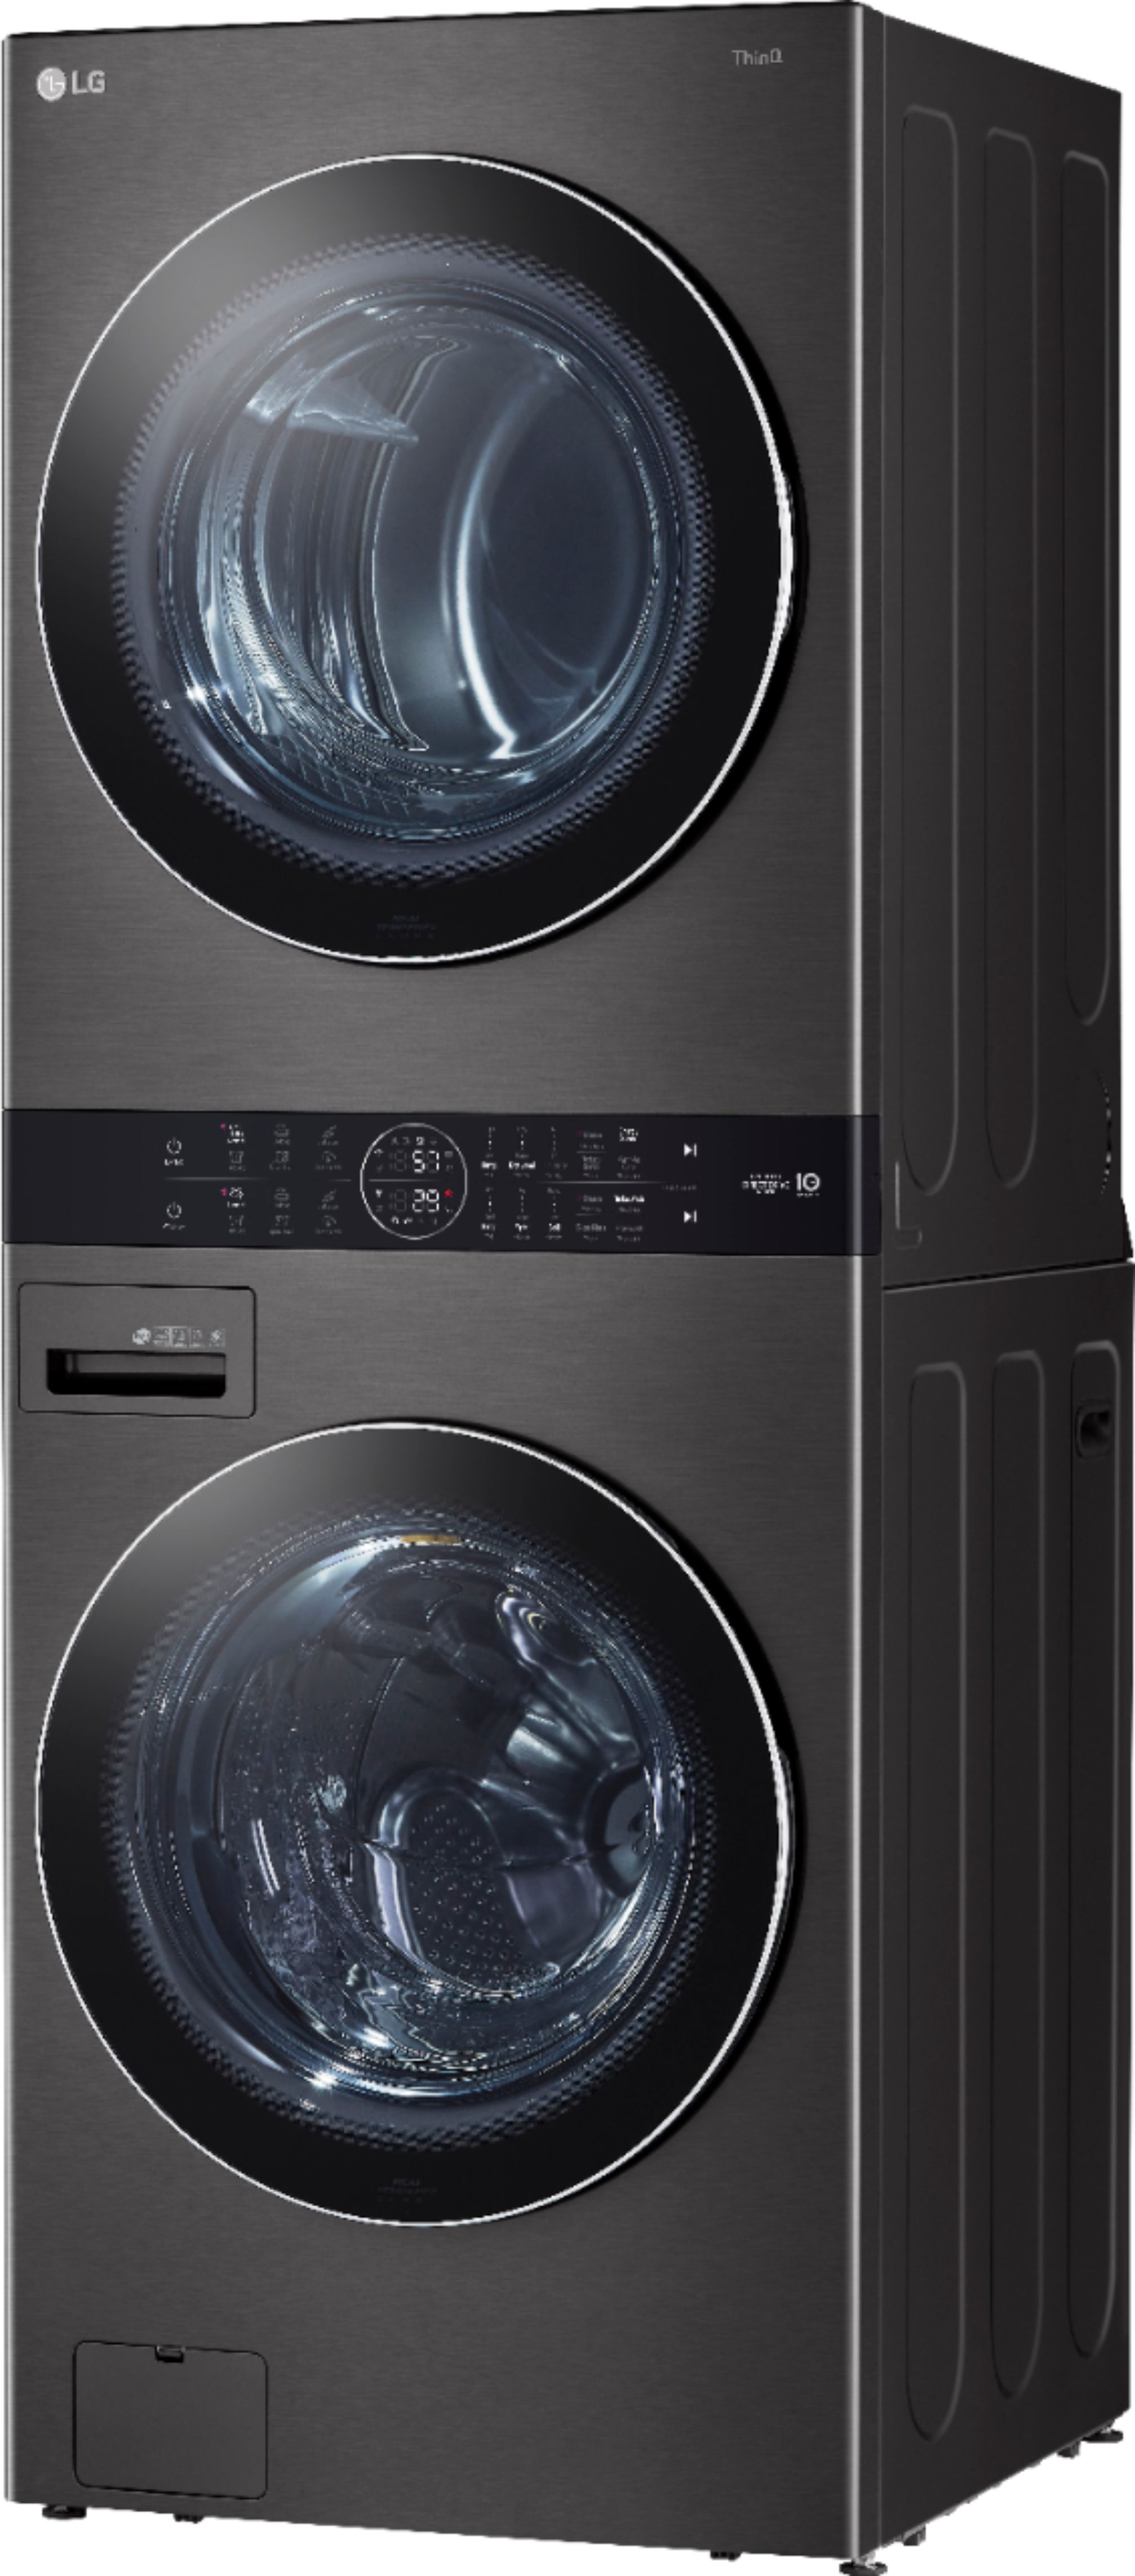 ZEQUAN Washing Machine Base Color : Metallic Washing Machine And Refrigerator,Metallic Stainless Steel Adjustable Movable Base Load Capacity 500kg,for Dryer 